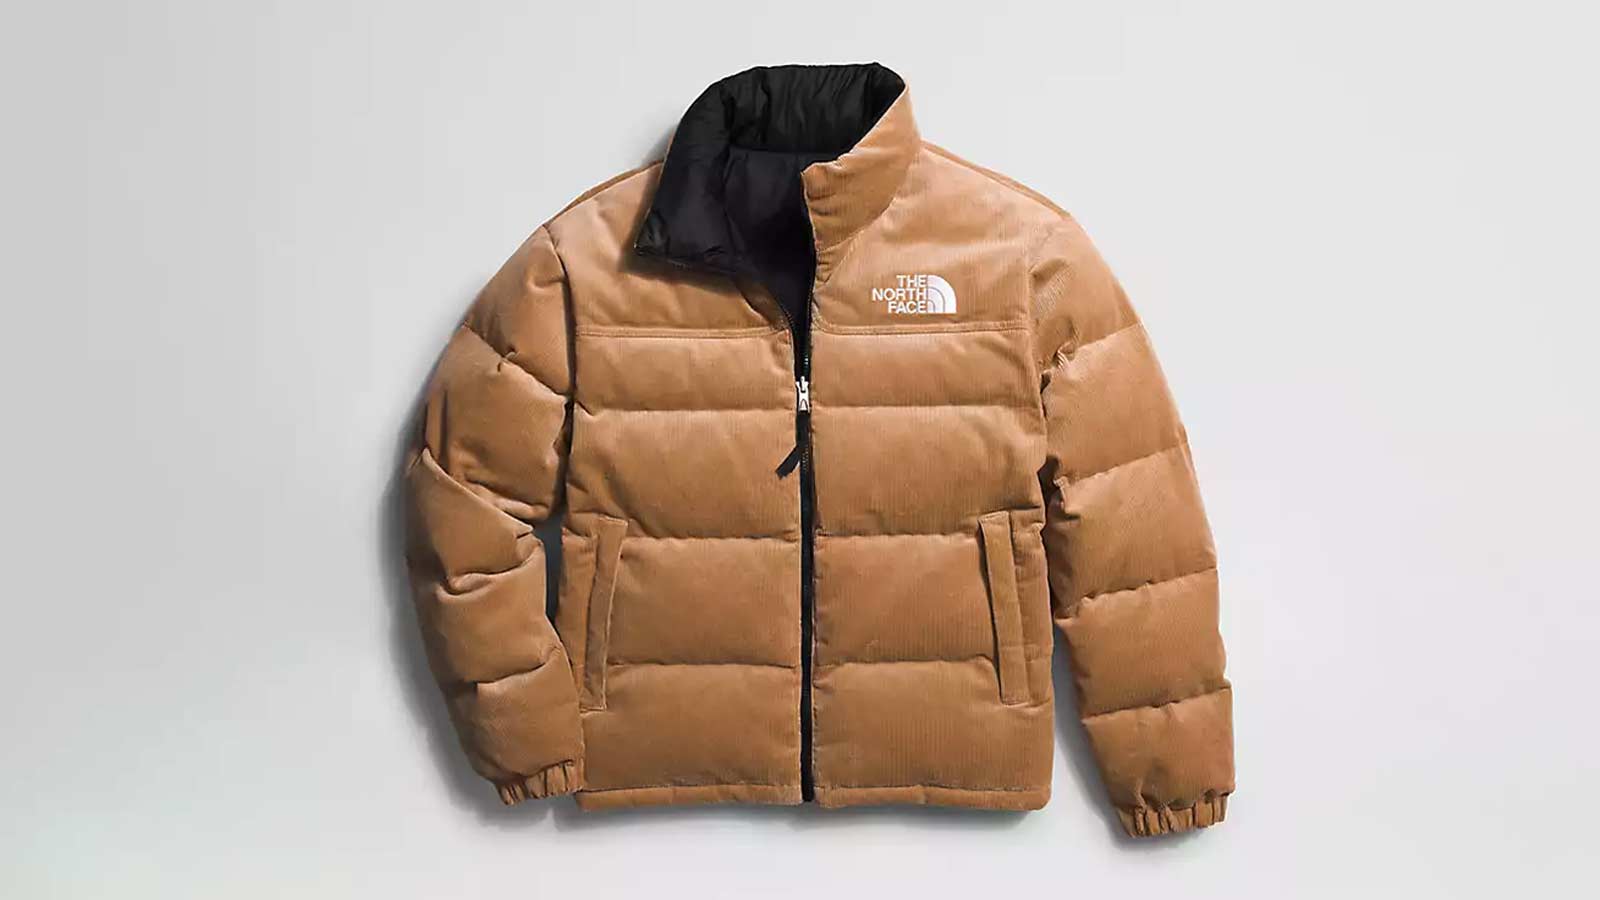 The North Face Men’s ’92 Reversible Nuptse Jacket